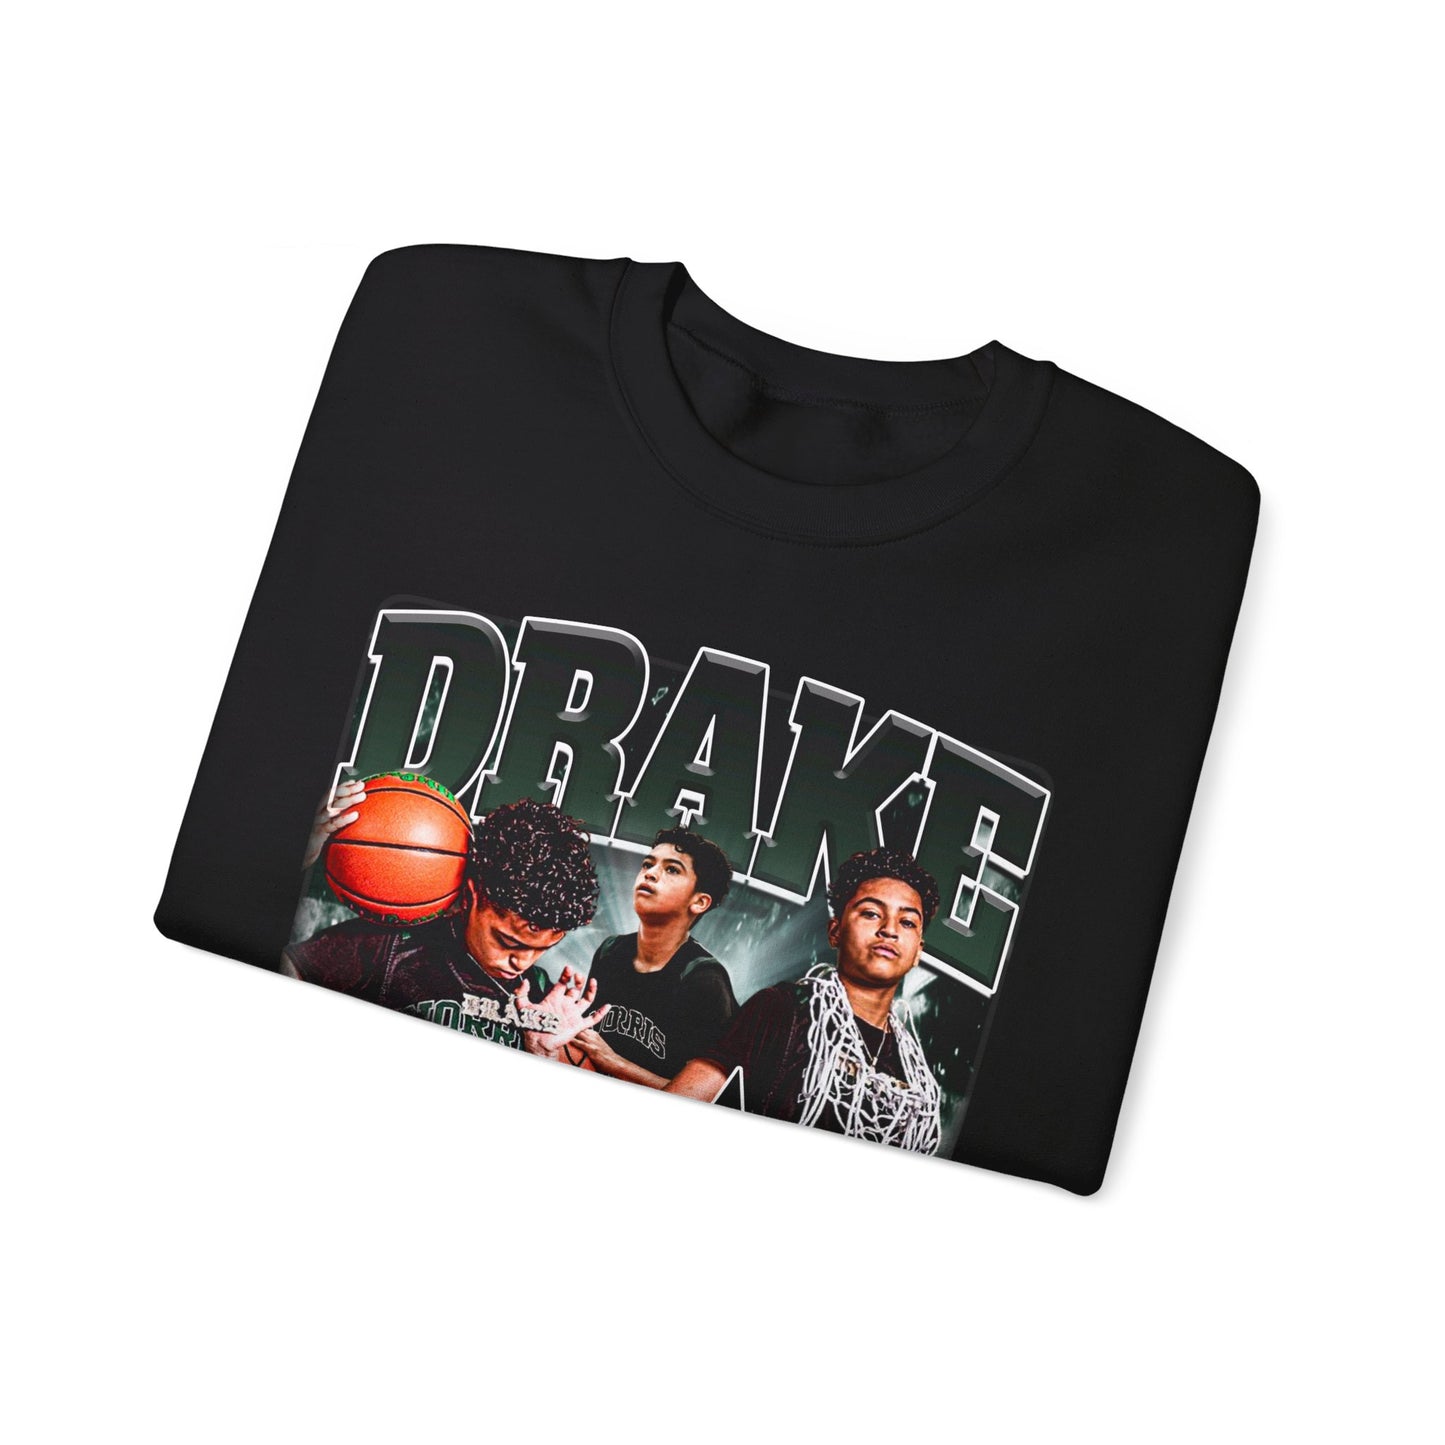 Drake Jimenez Crewneck Sweatshirt